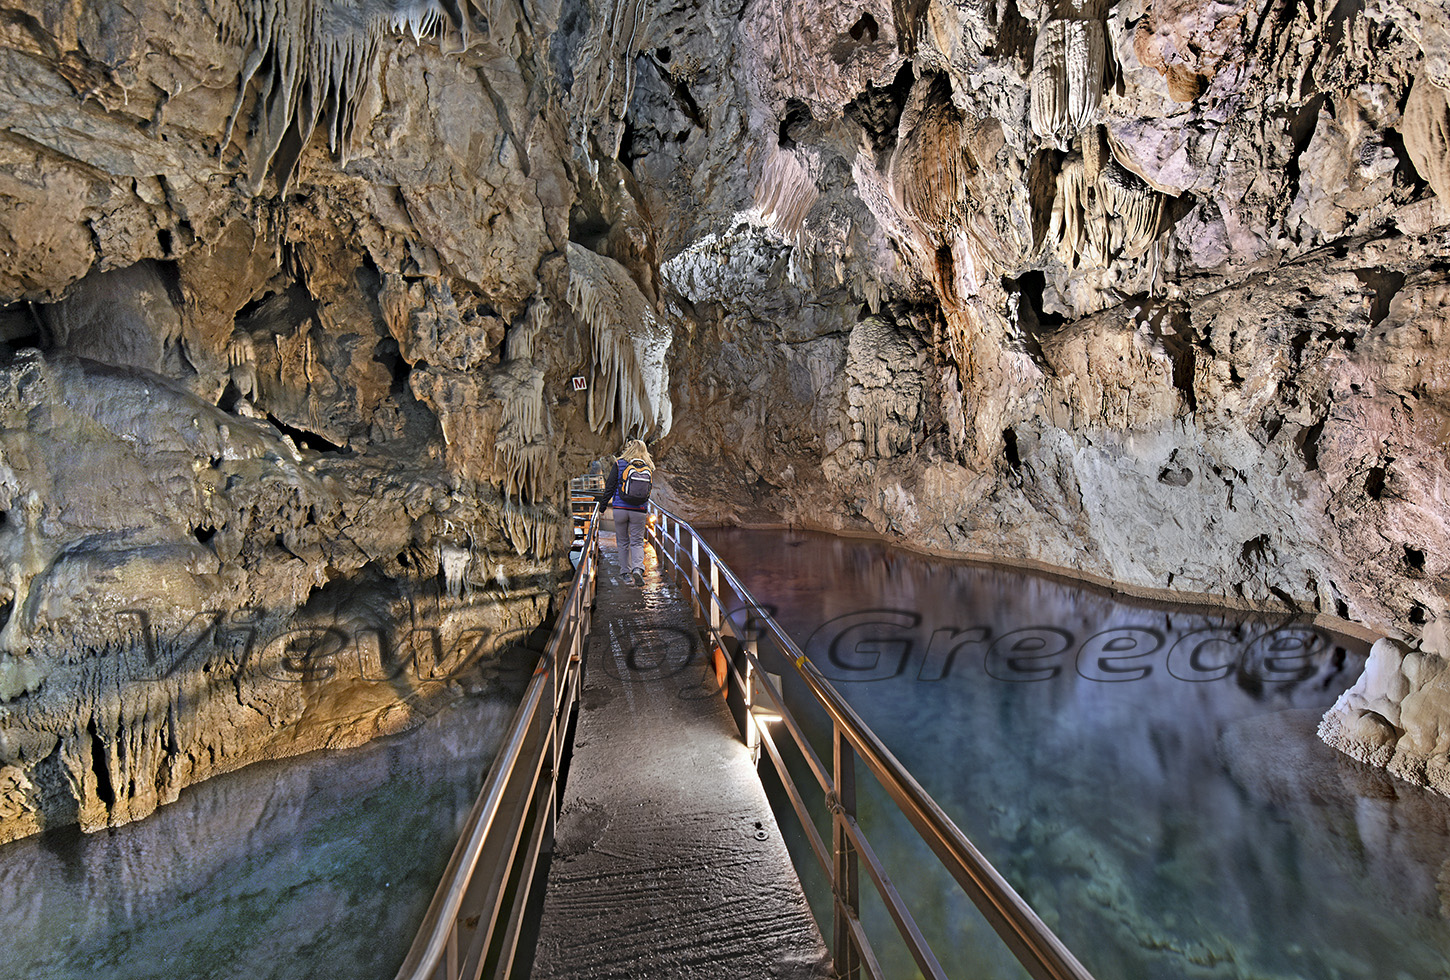 Mt Helmos, Κλειτορία, Πλανητέρο, Σπήλαιο Καστριά, σπήλαιο, Διαδρομές,